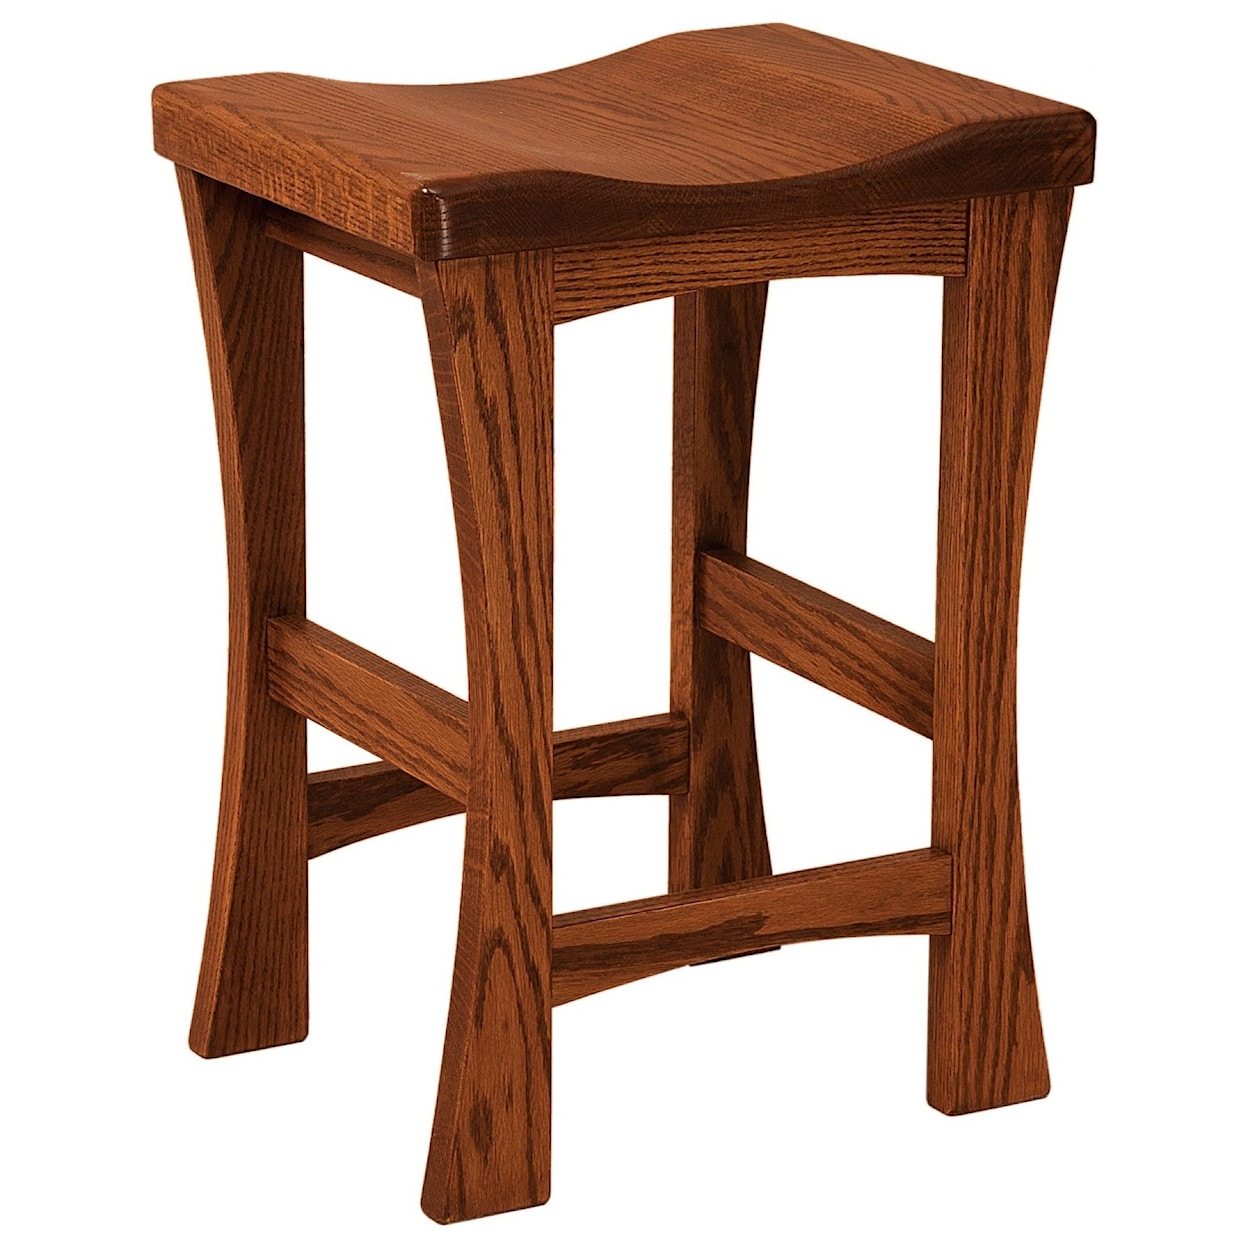 F&N Woodworking Kalston 30" Height Bar Stool - Wood Seat